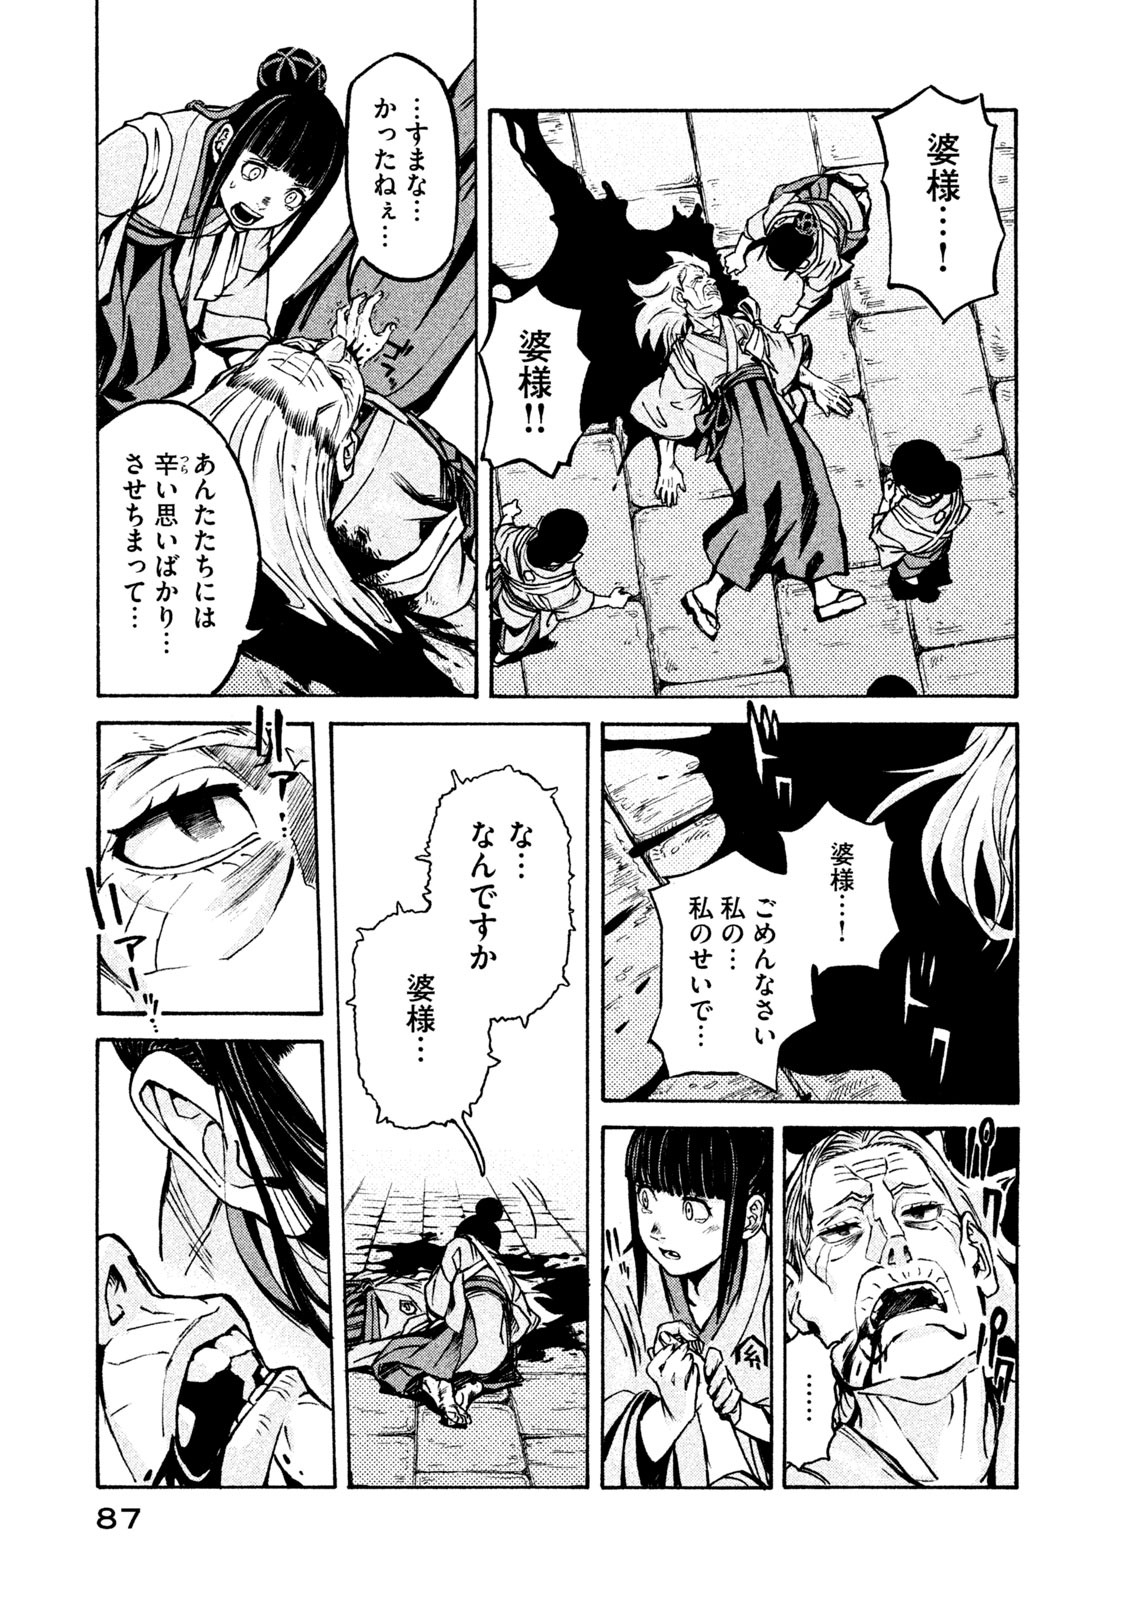 Hataraku Saibou BLACK - Chapter 14 - Page 11